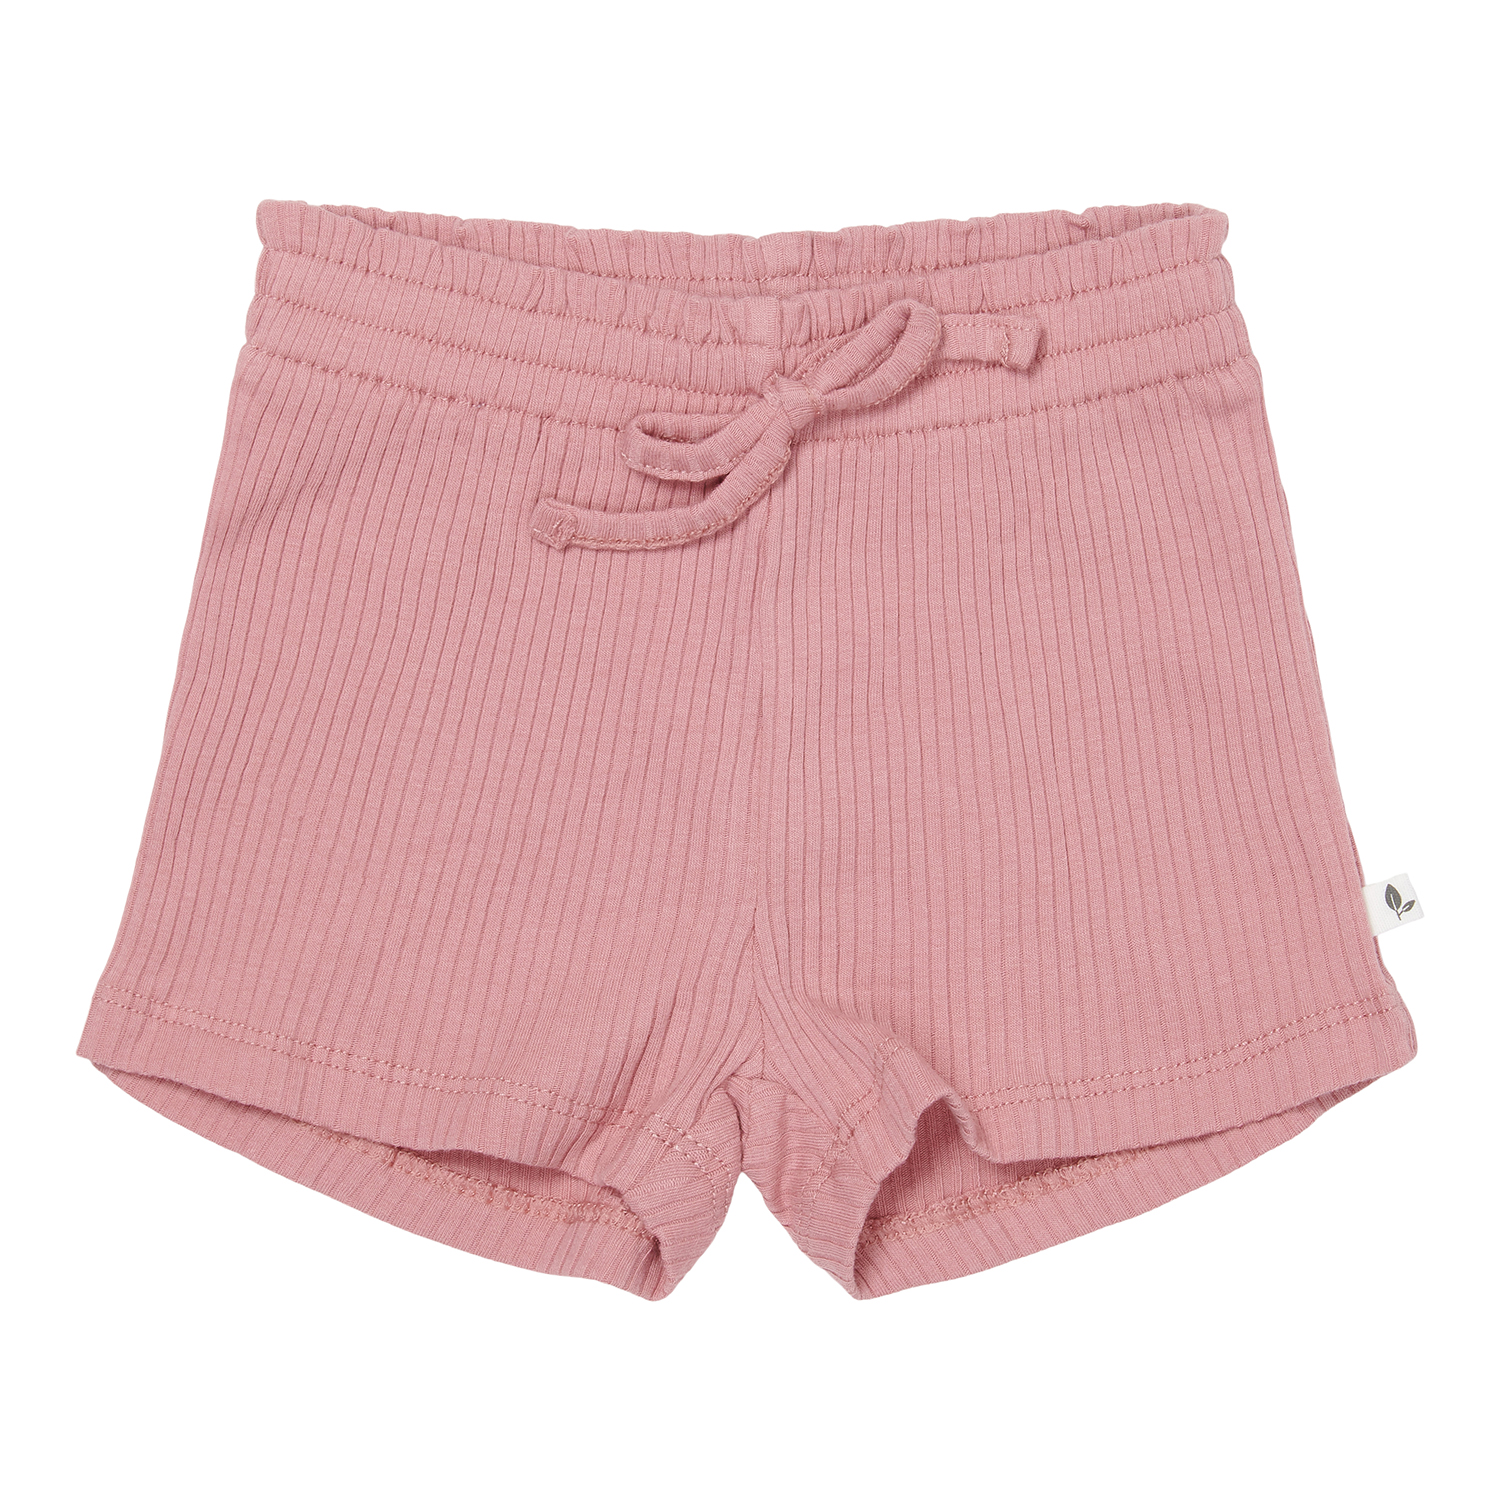 Kurze Hose / Shorts Rippe vintage pink (Gr. 50/56)